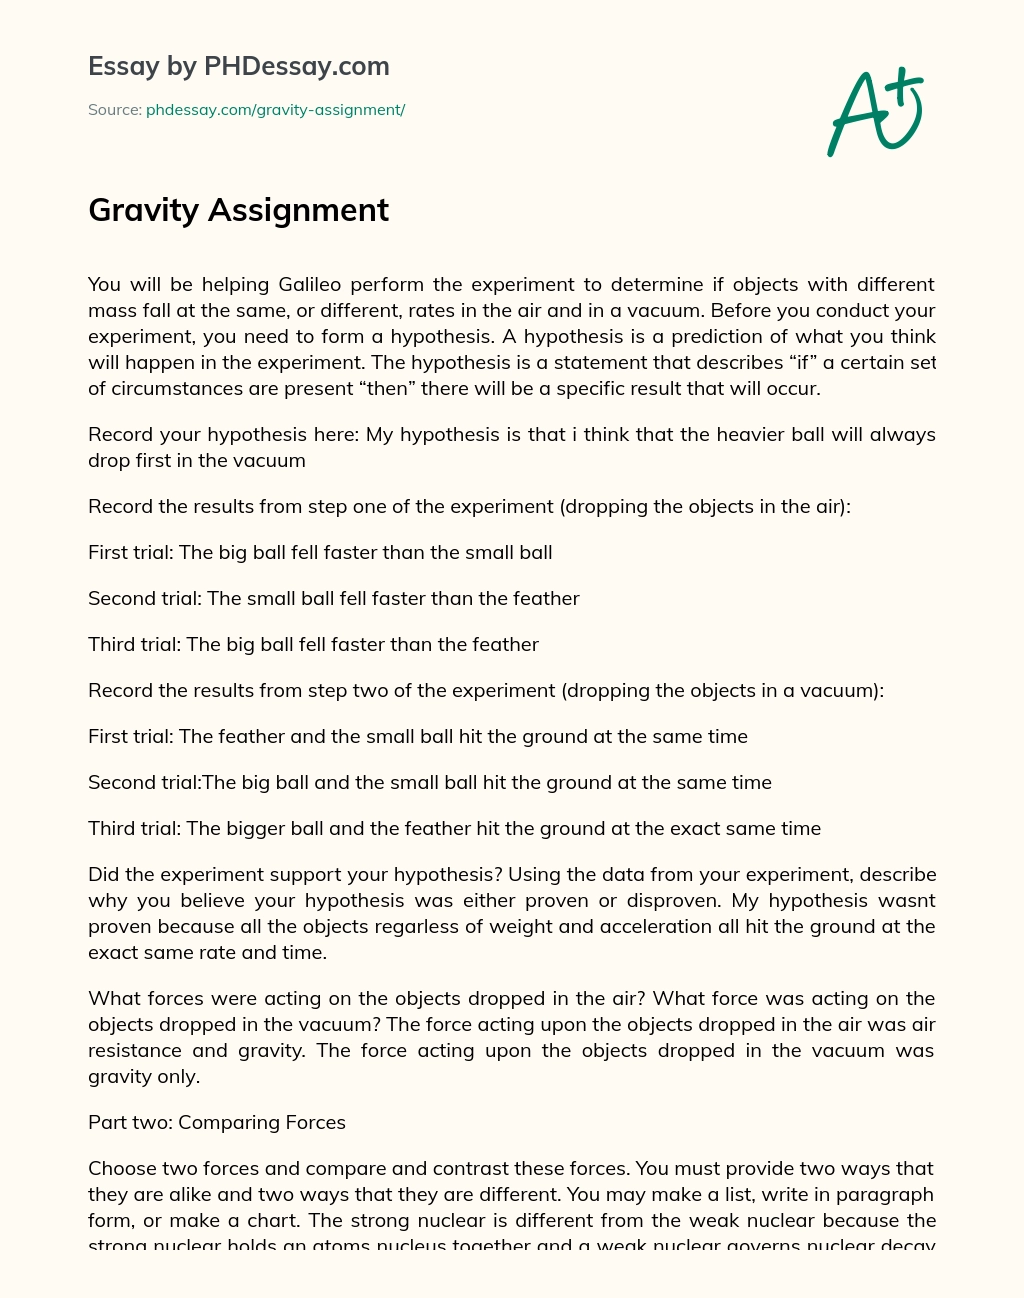 Gravity Assignment essay